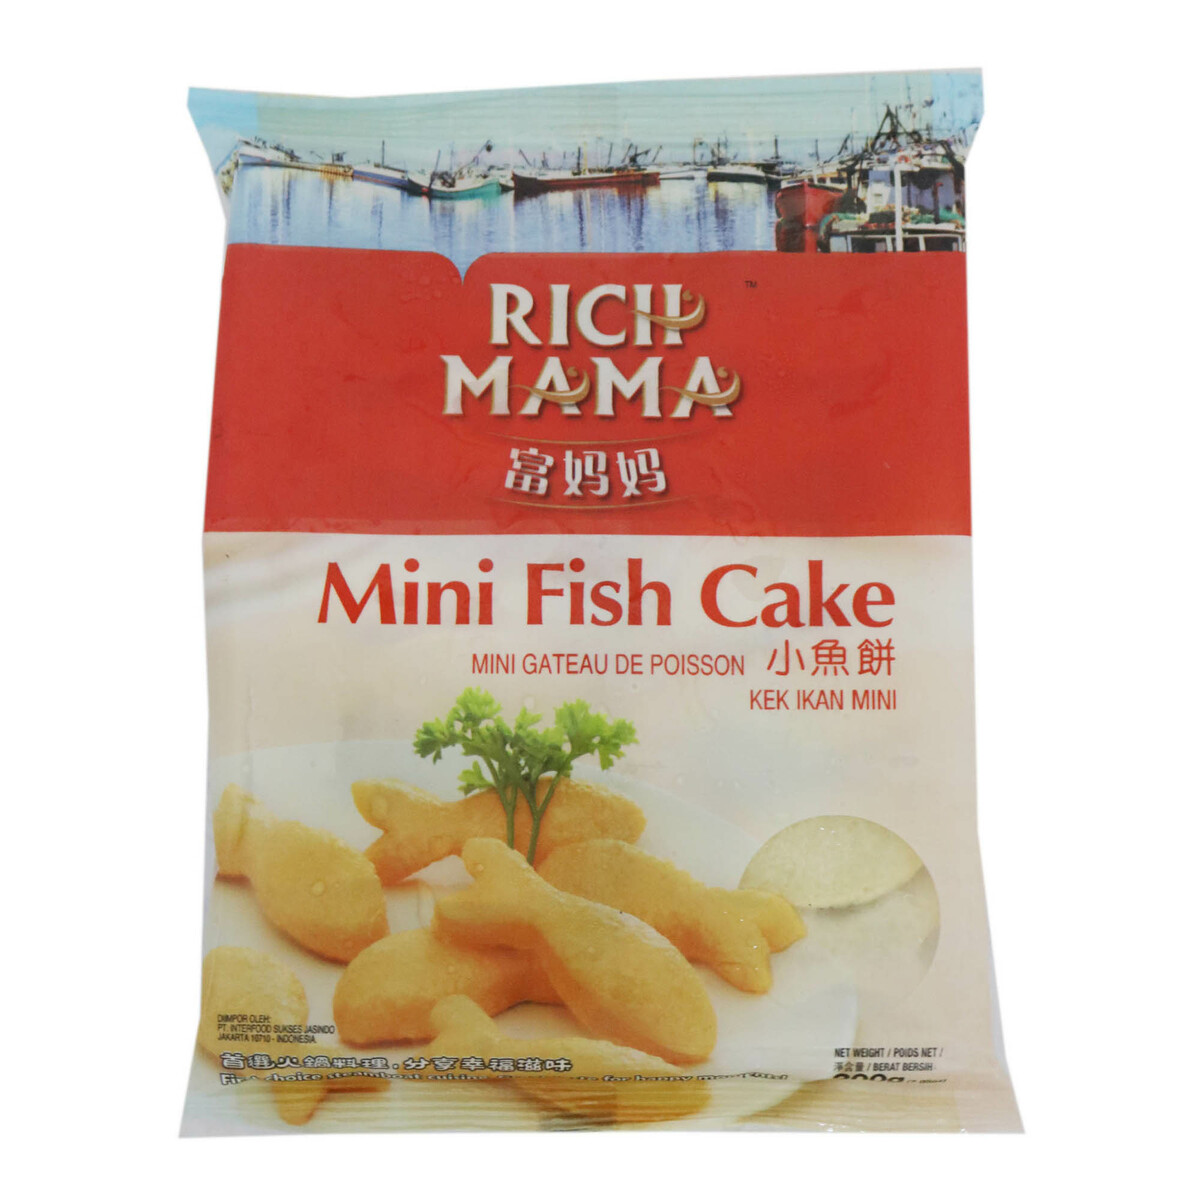 Richmama Mini Fish Cake 200g